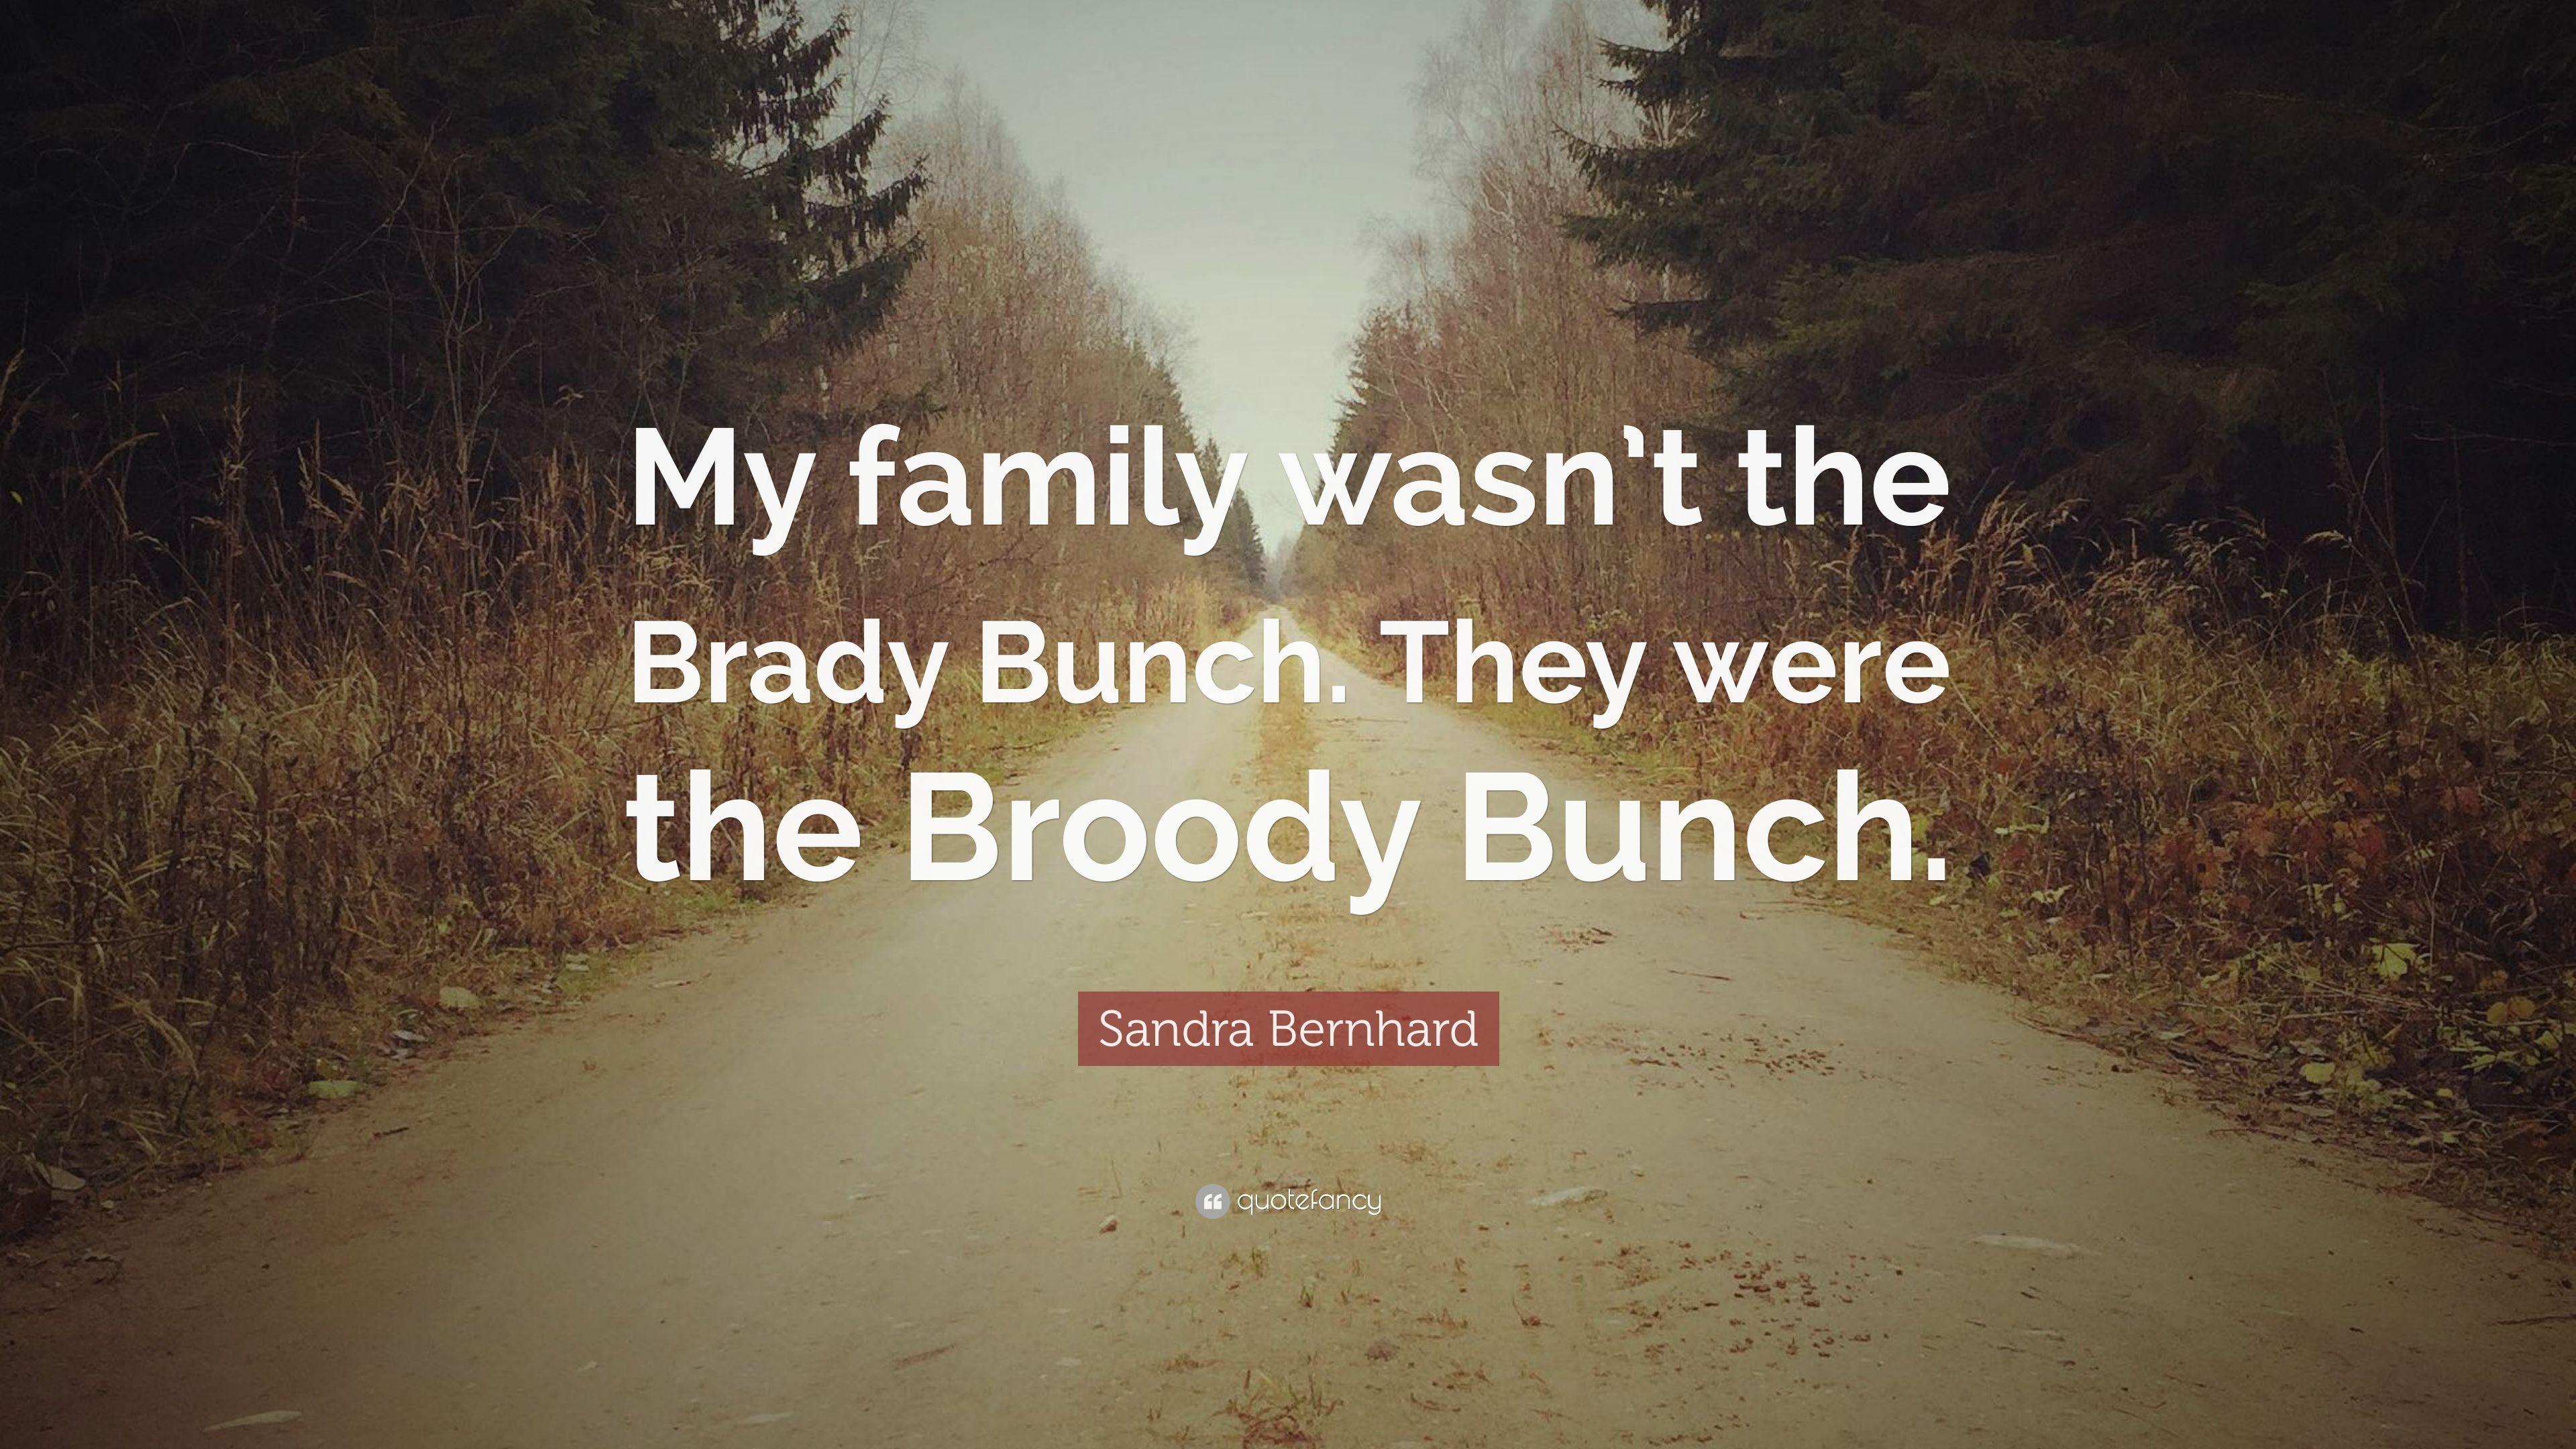 Sandra Bernhard Quote: “My family wasn't the Brady Bunch. They were